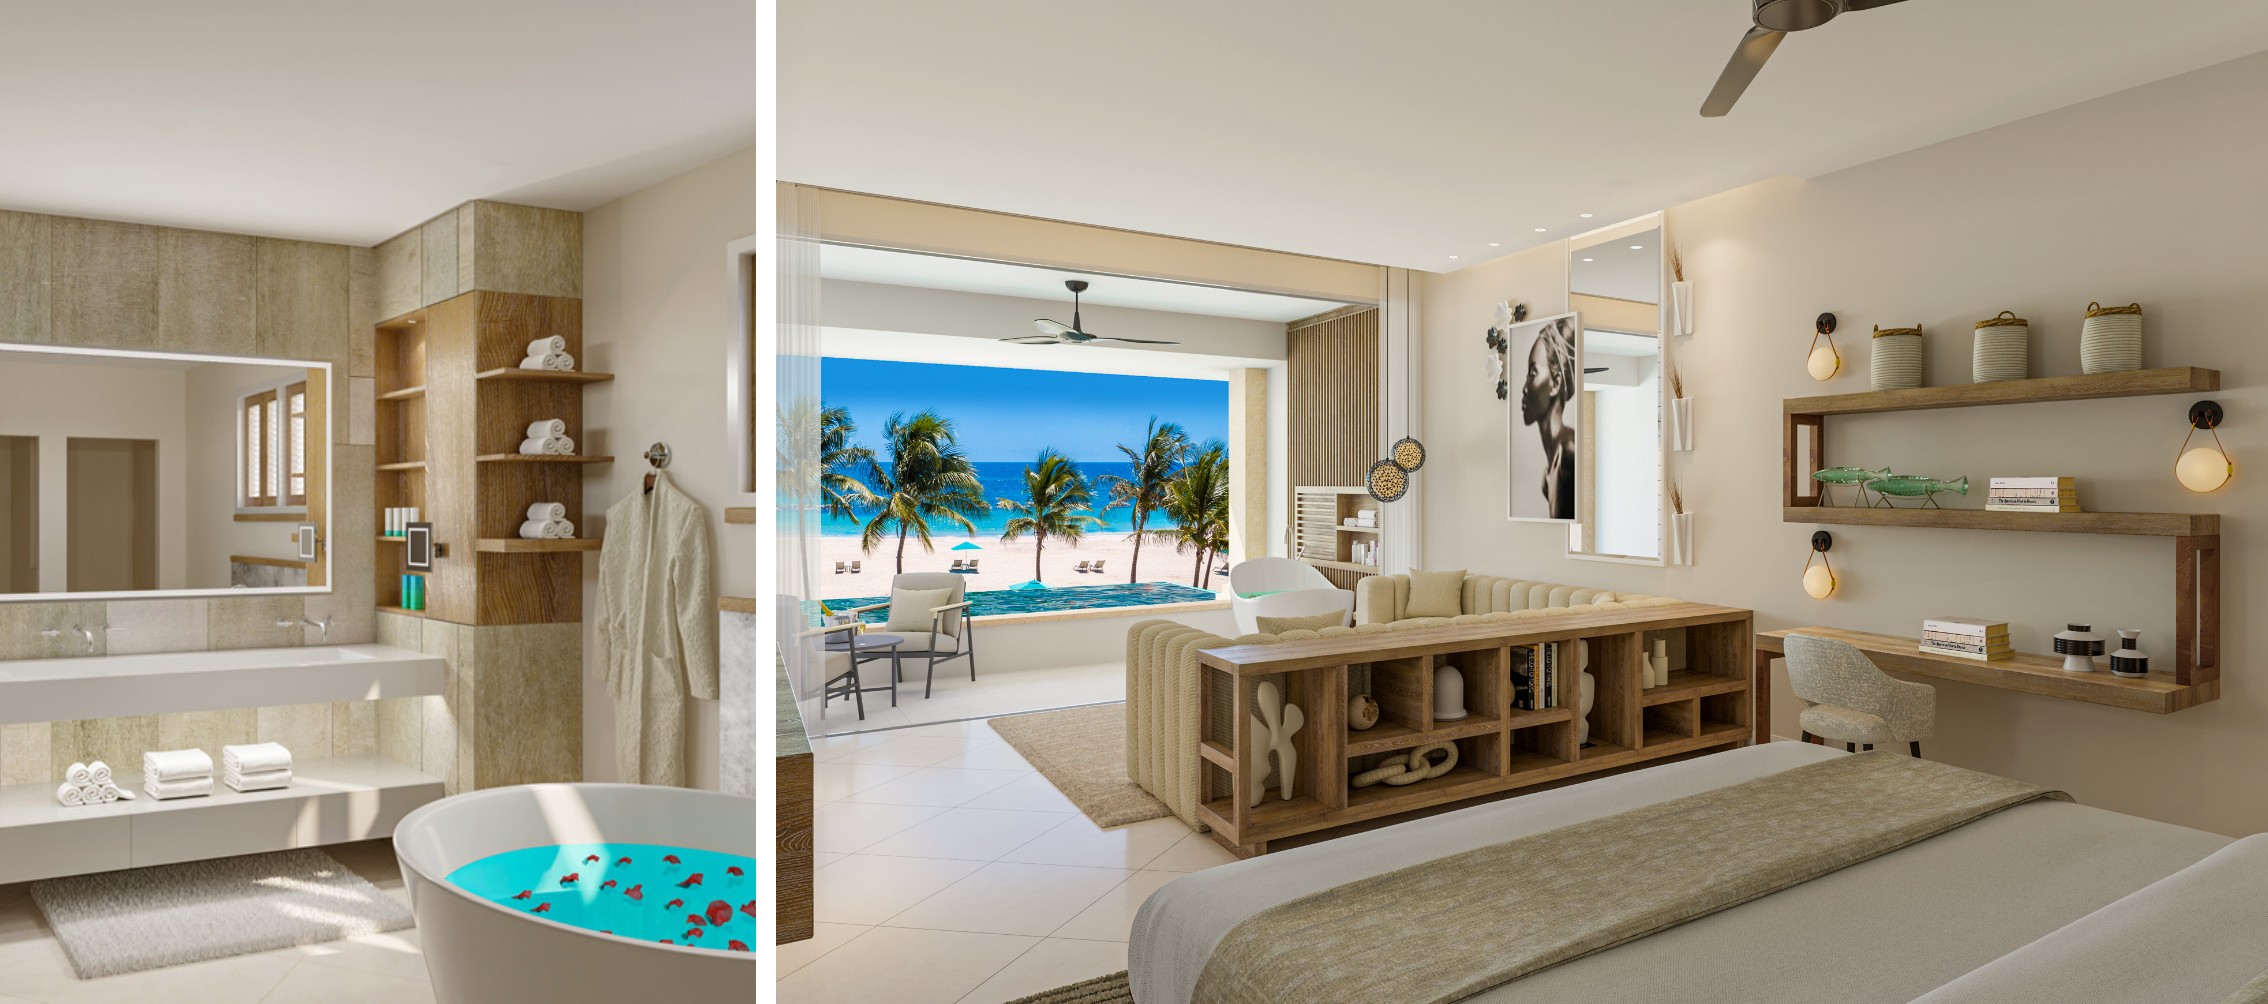 Sandals Ochi Beach Resort Rooms: Pictures & Reviews - Tripadvisor